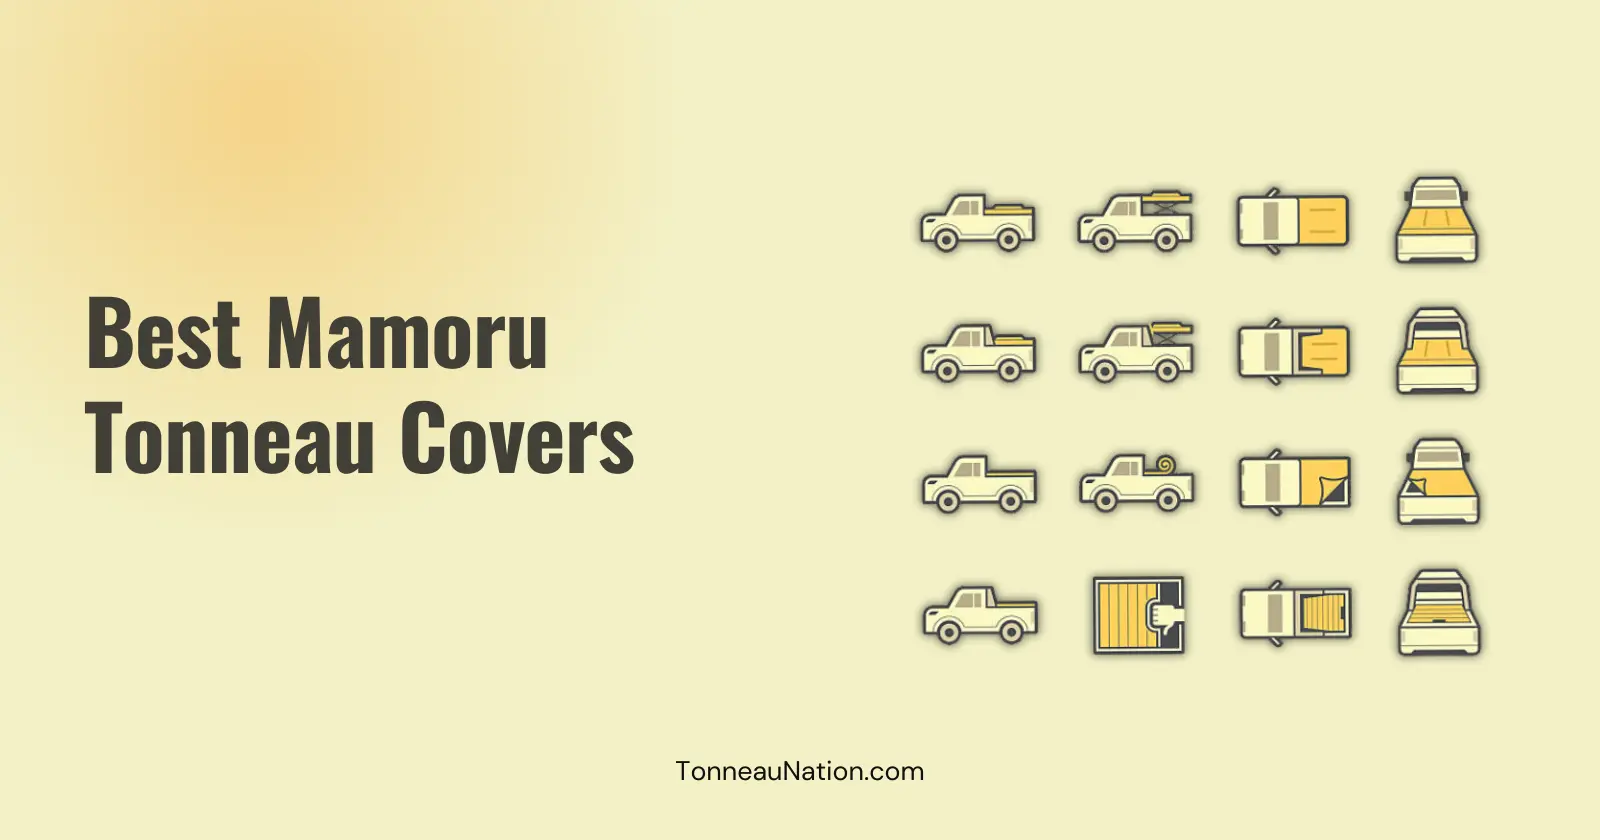 Tonneau cover from Mamoru brand